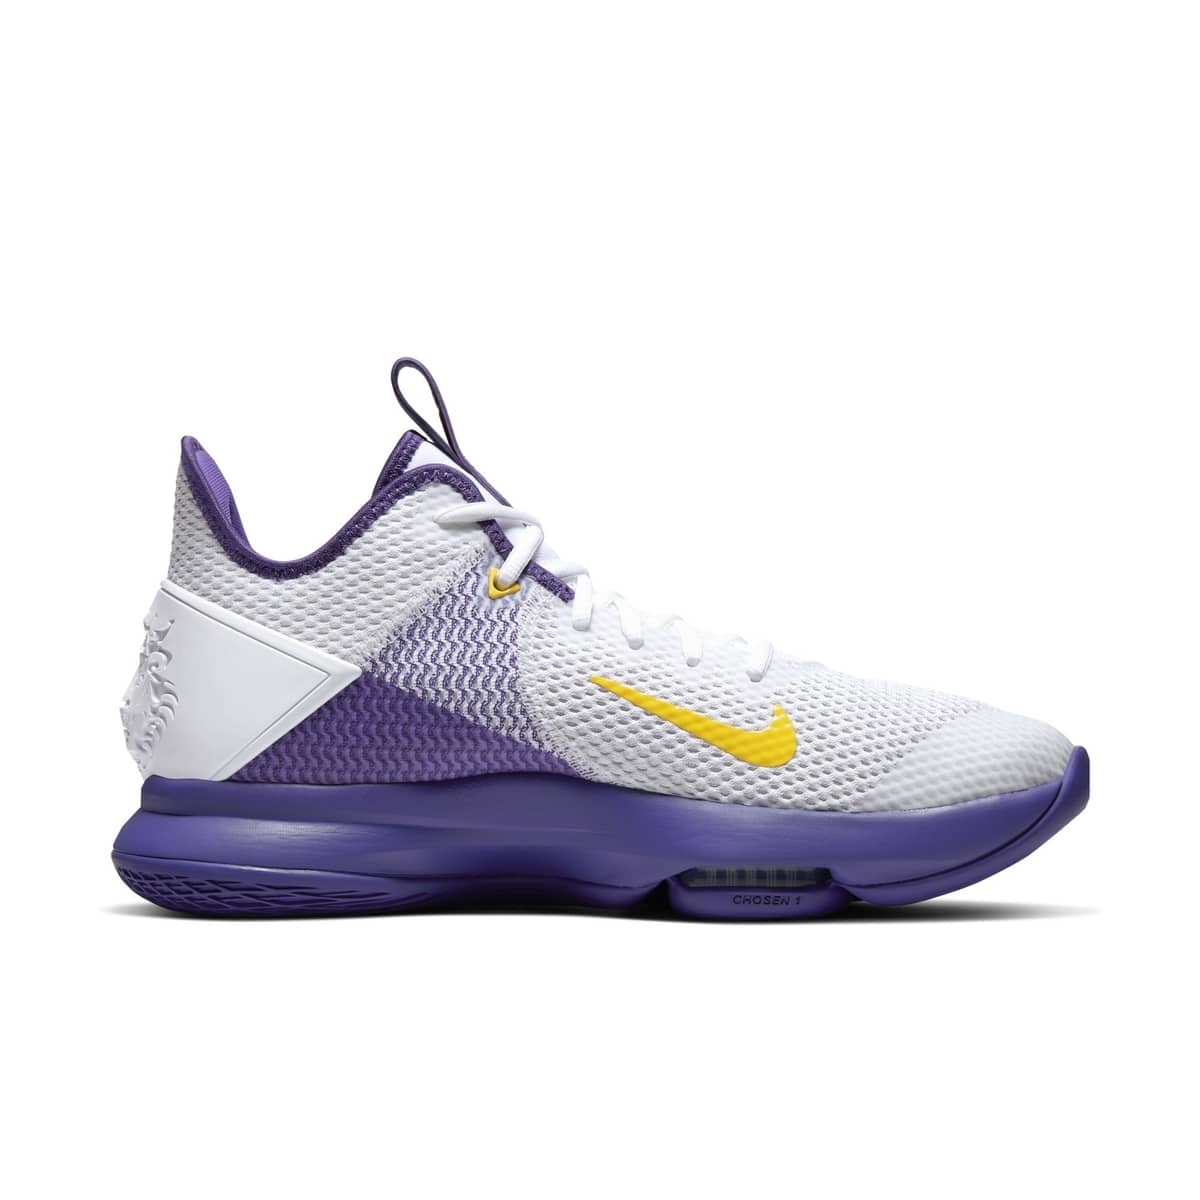 Nike-LeBron-Witness-4-Colorways-Lakers 